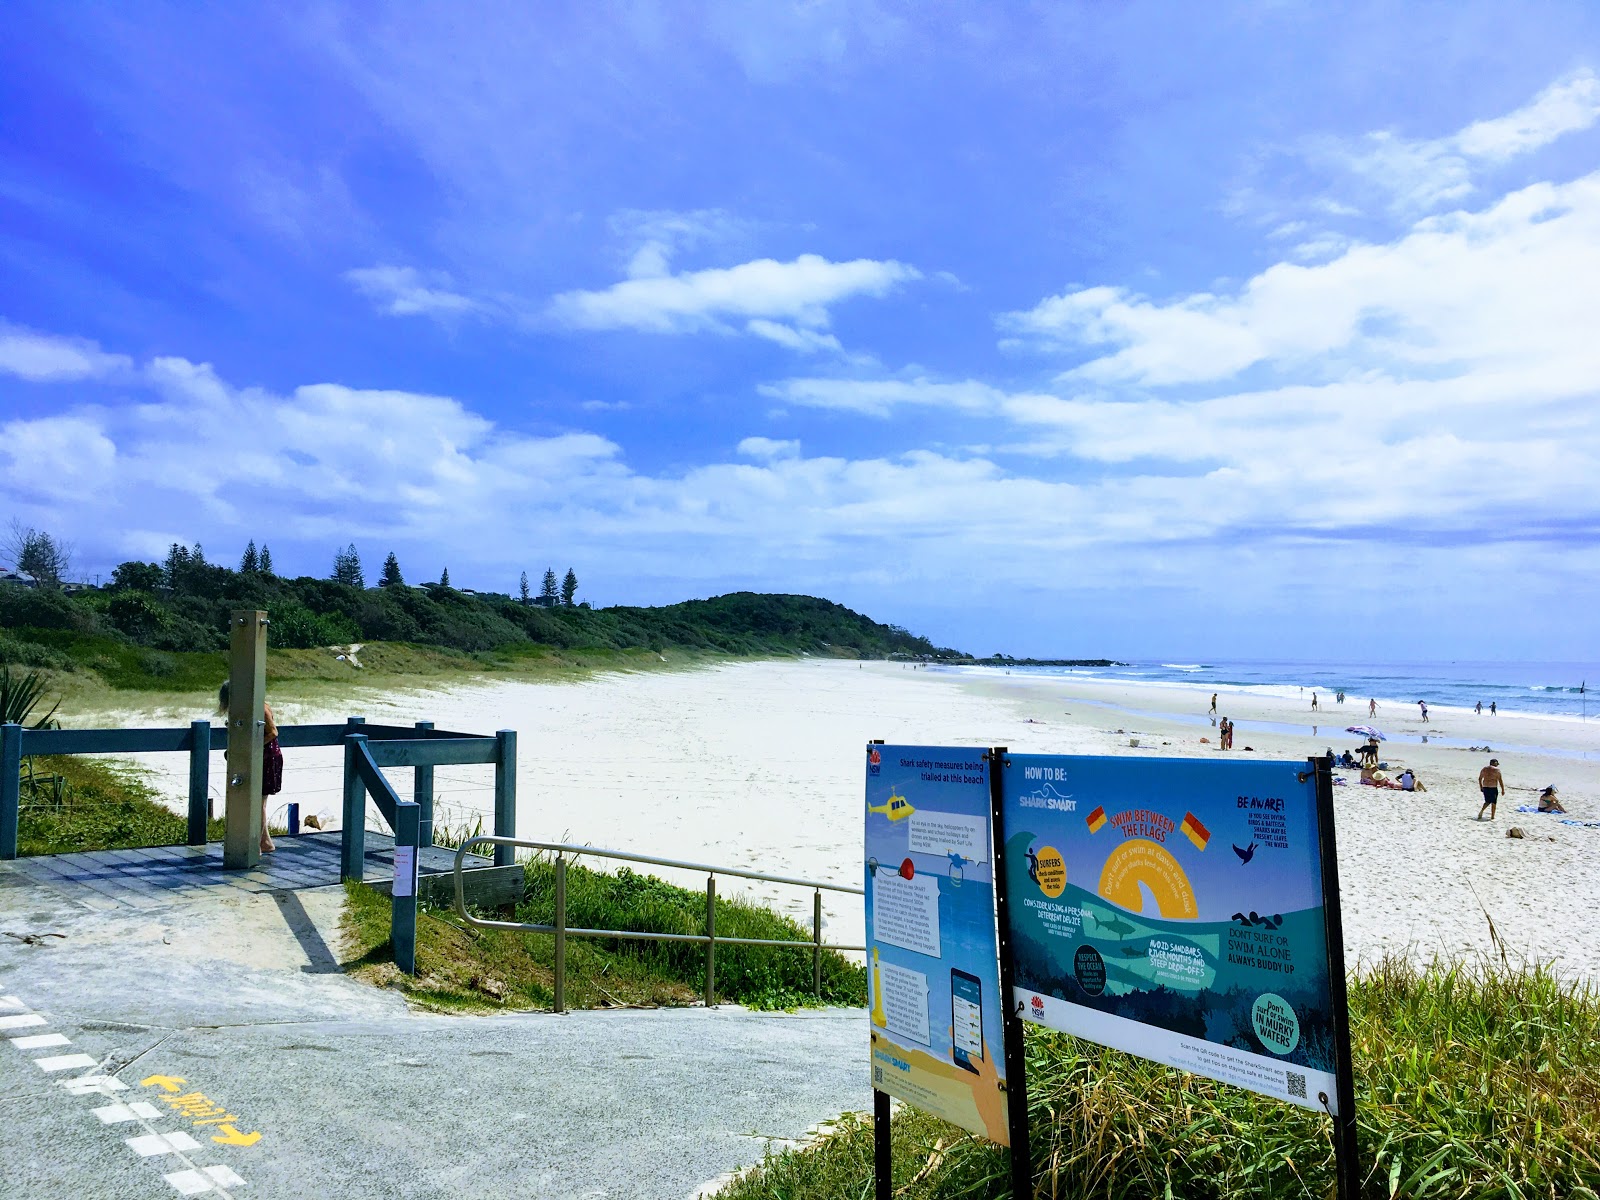 Foto de Shelly Beach - lugar popular entre os apreciadores de relaxamento